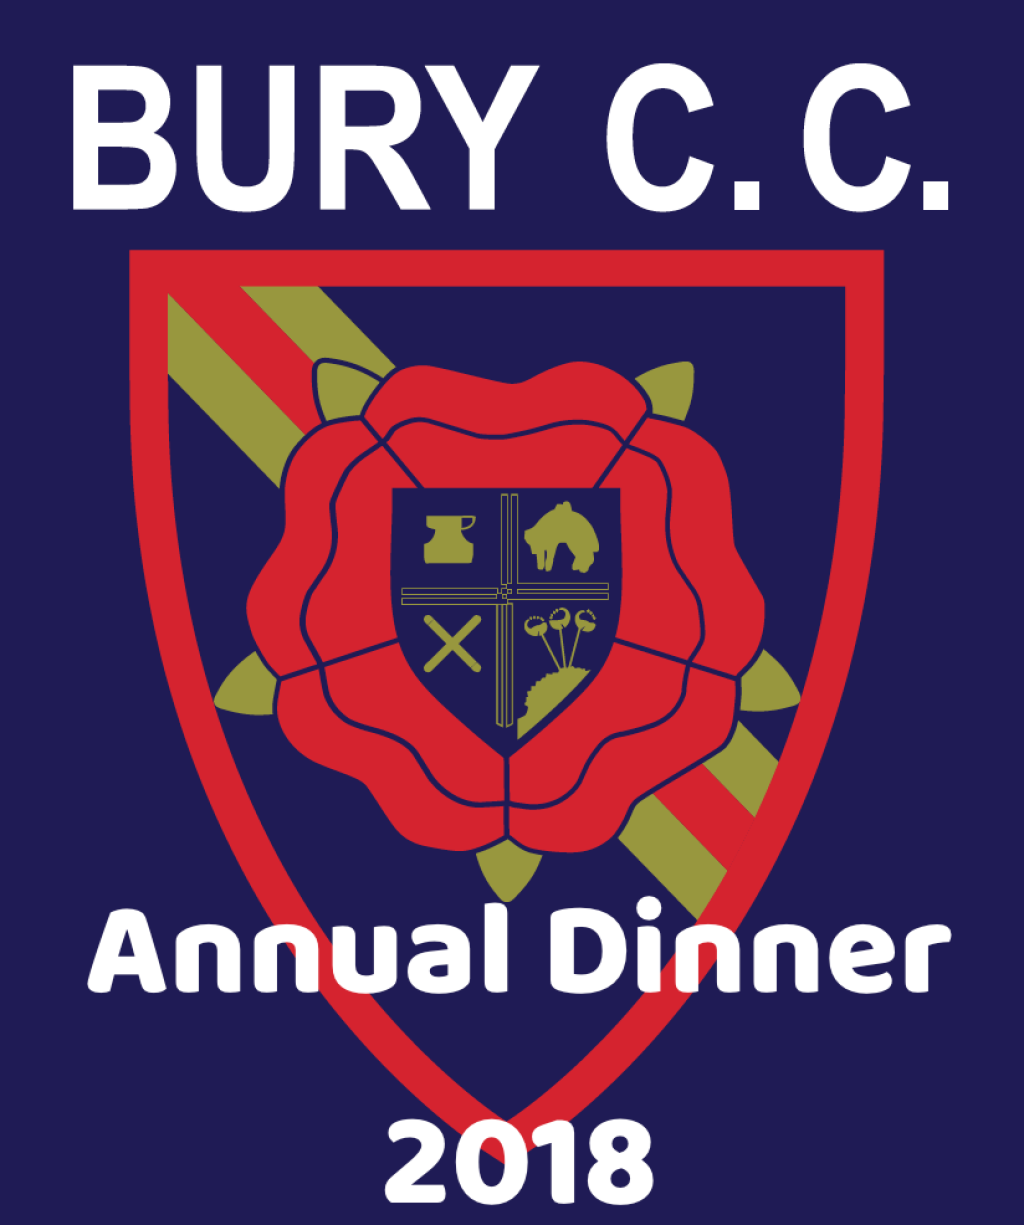 Bury Cricket Club Annual Dinner and Awards Night 2018